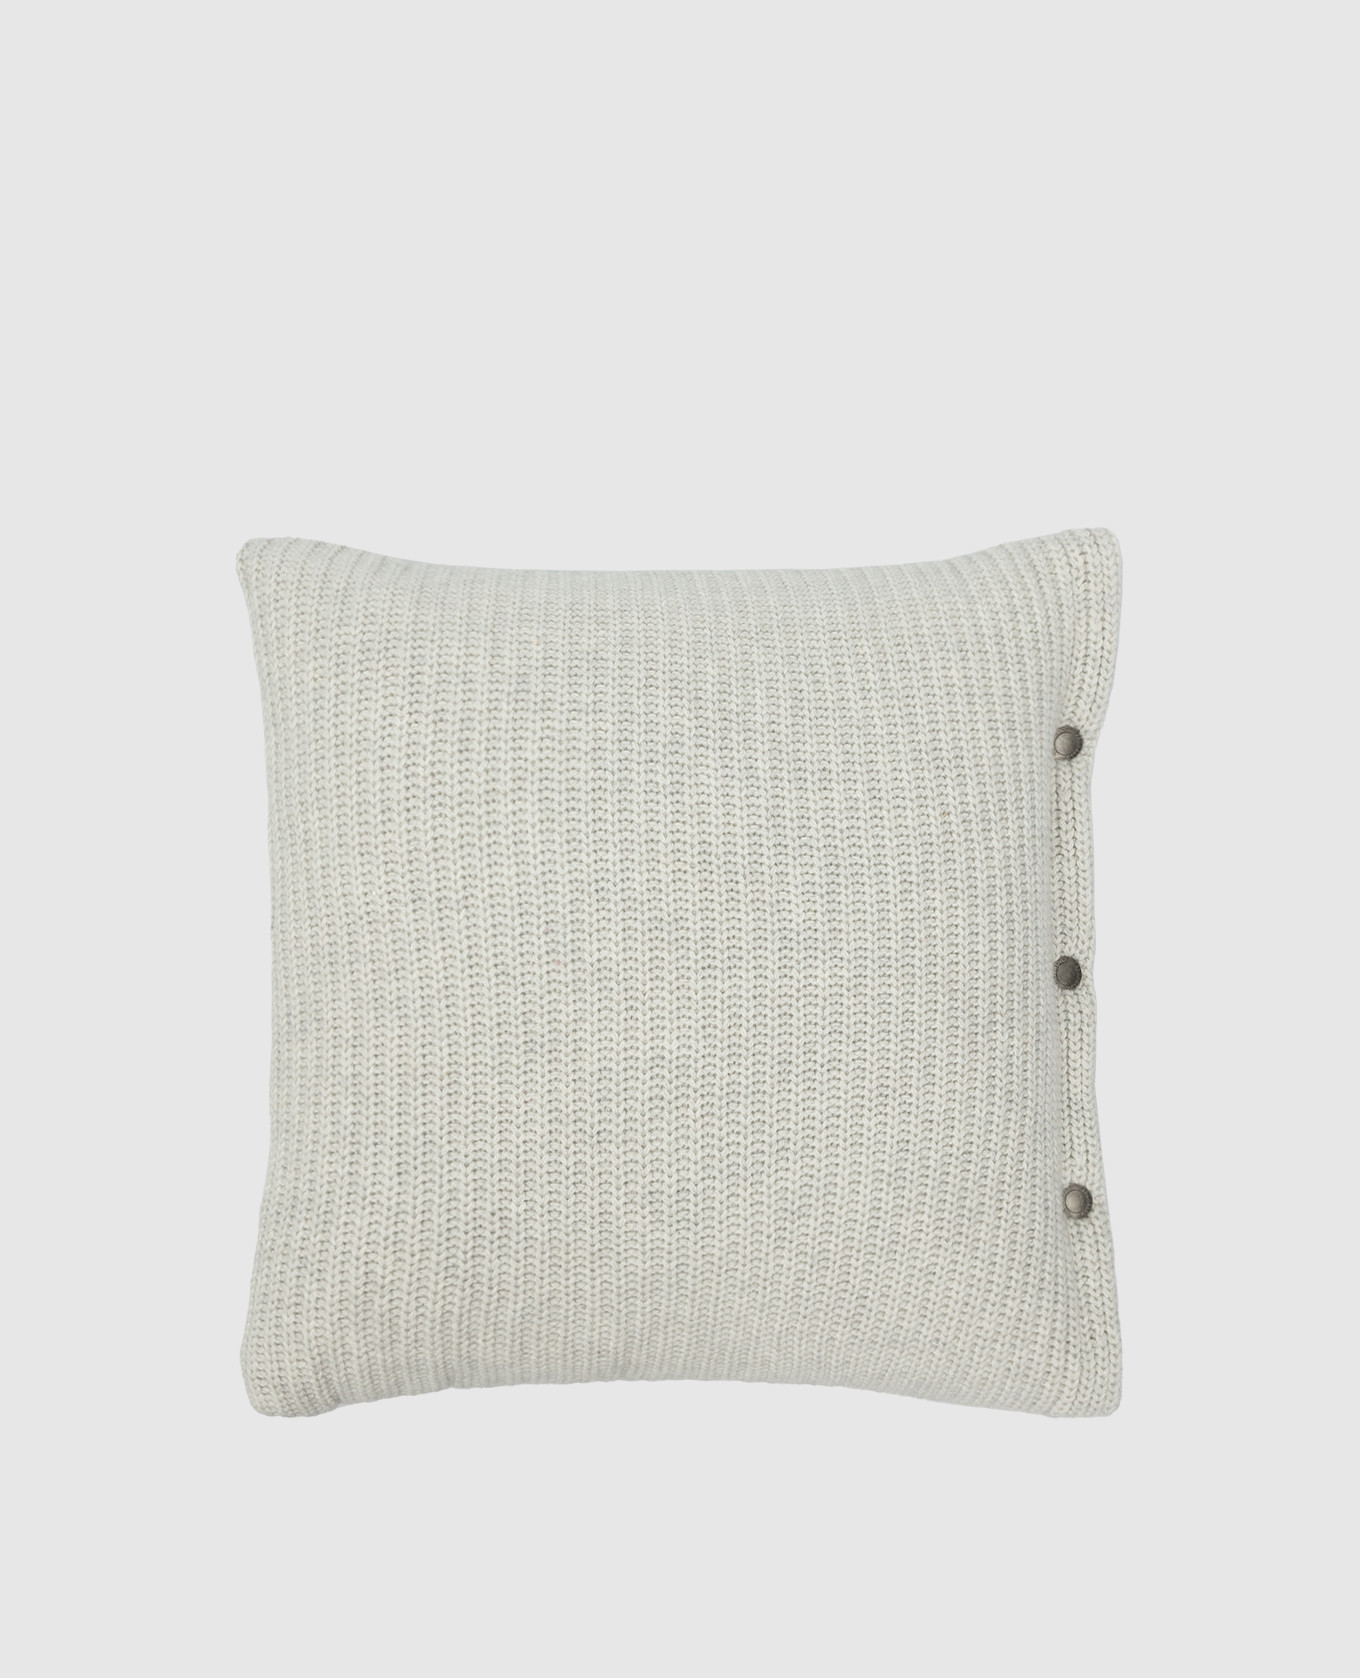 Light gray cashmere pillow